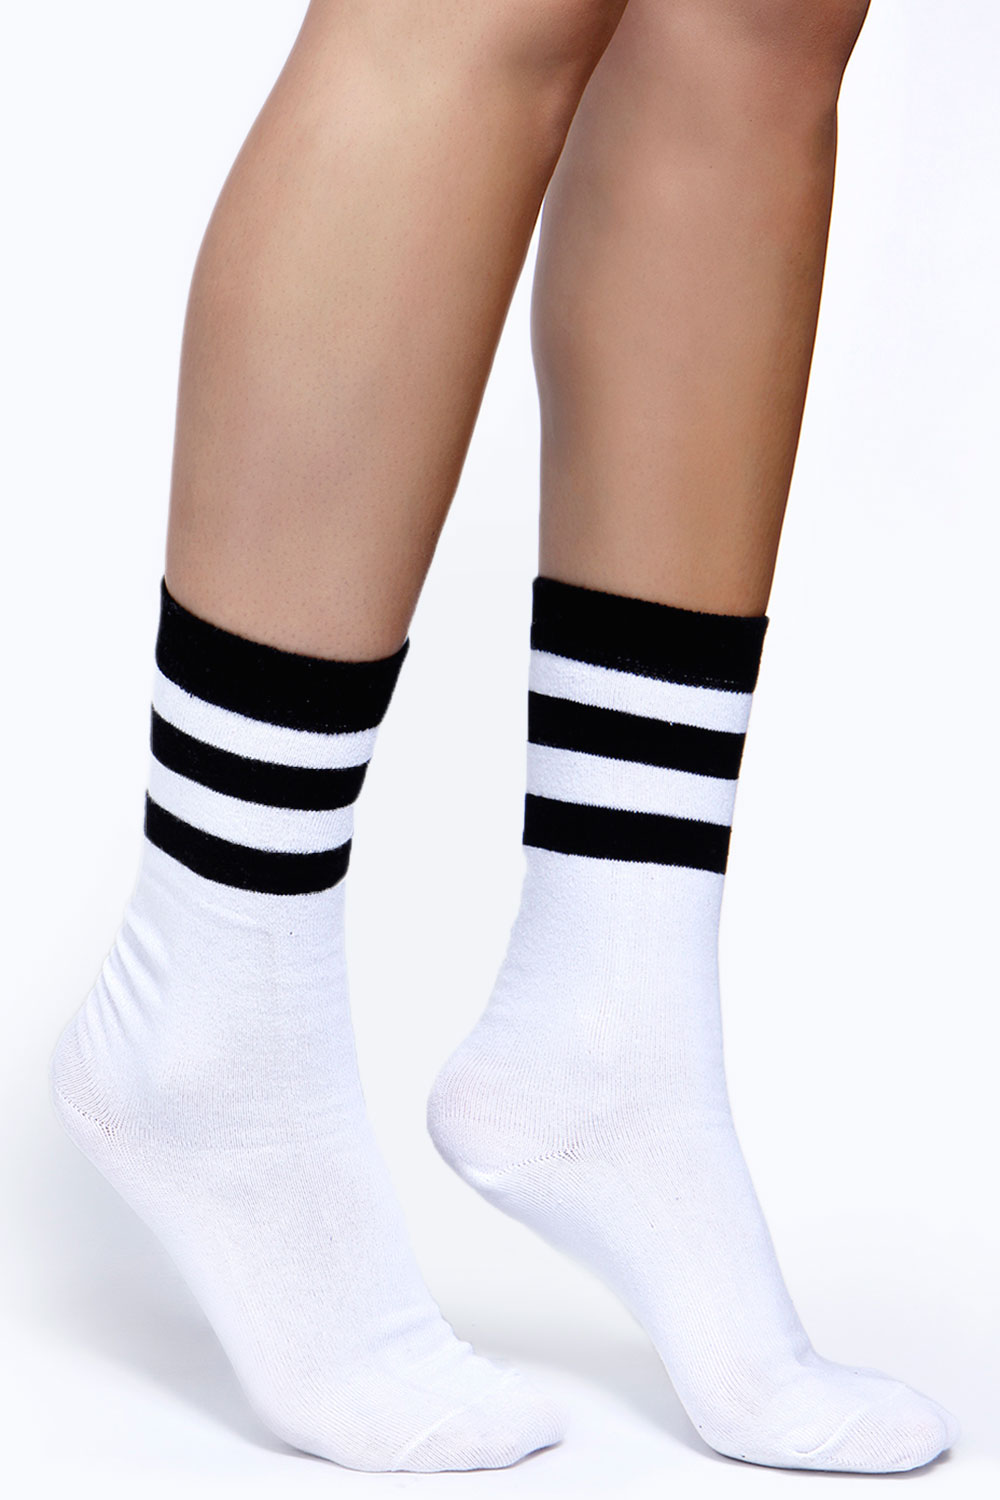 boohoo Victoria Striped Ankle Socks - white